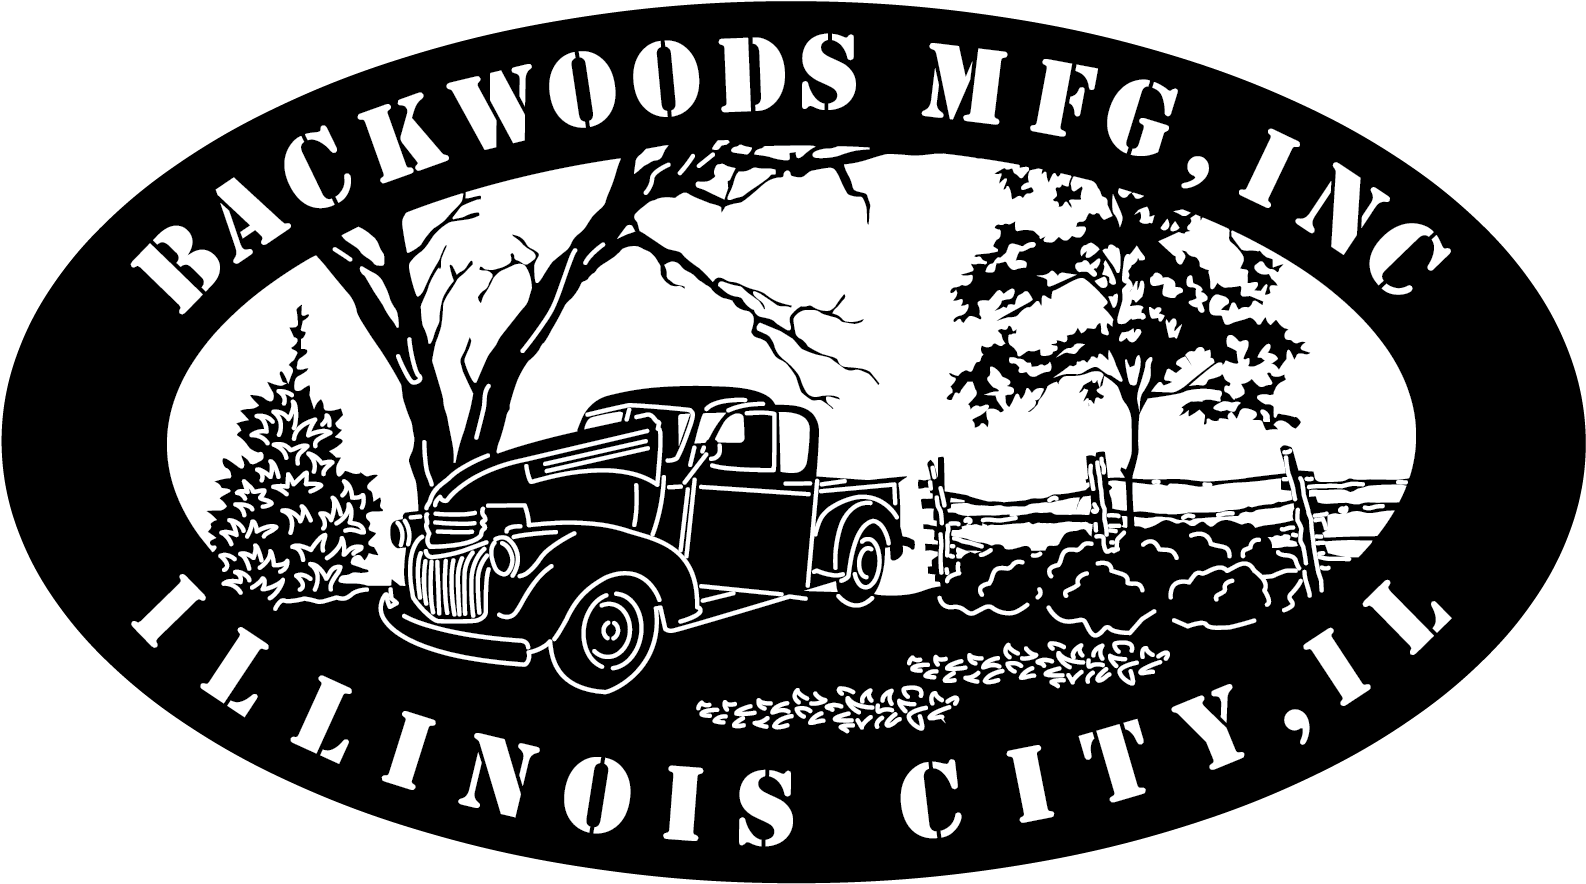 Backwoods Manufacturing Logo PNG image